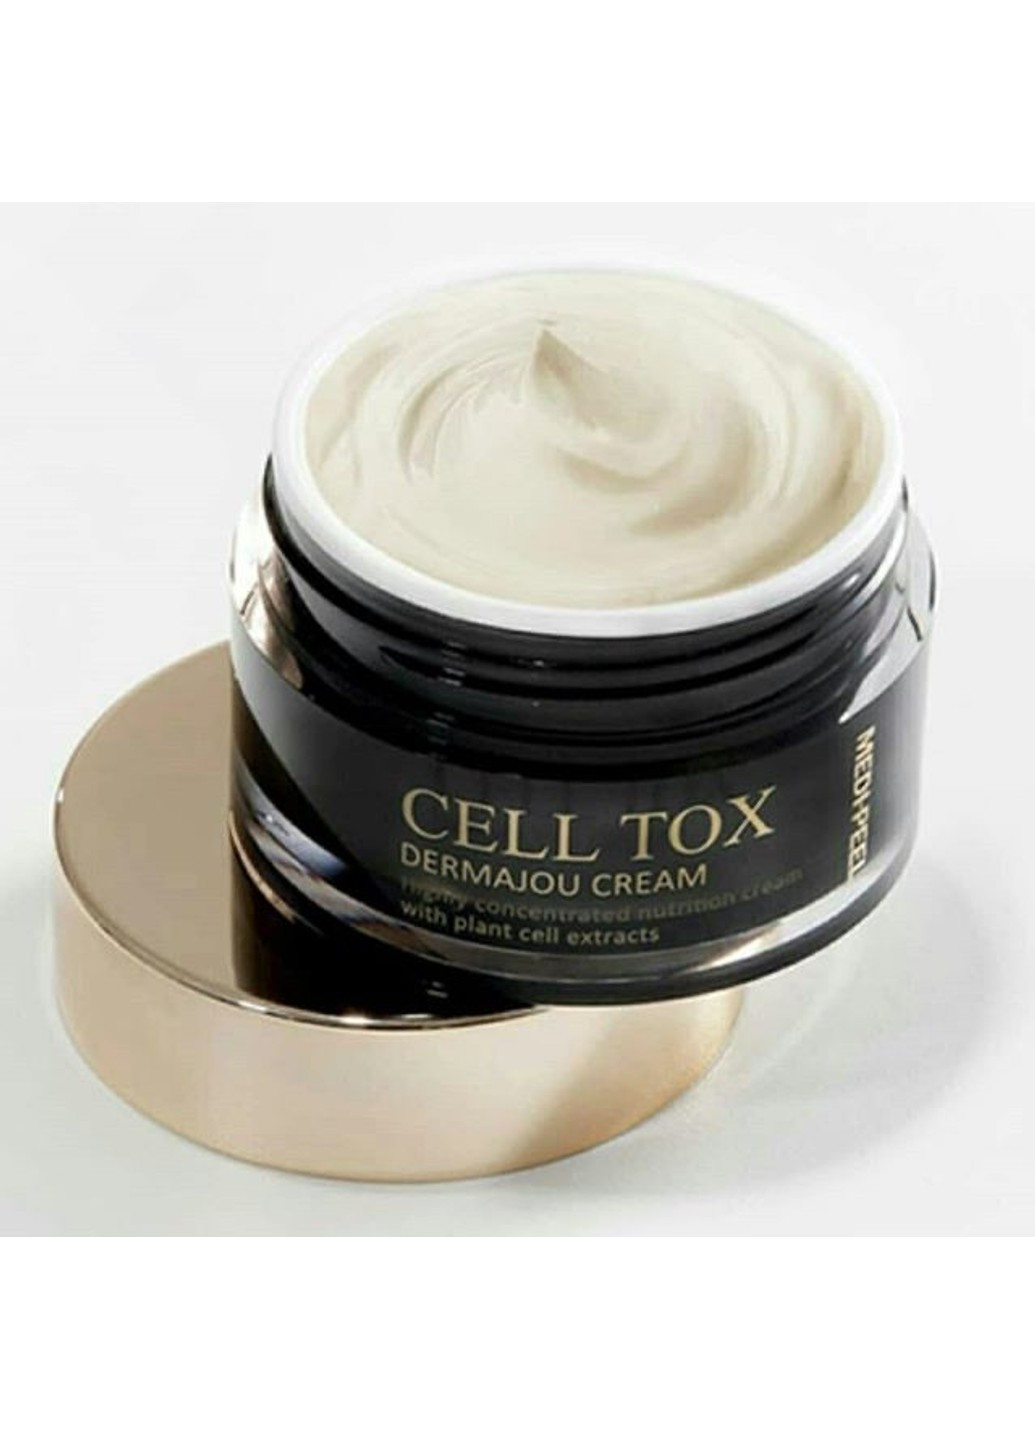 Омолаживающий крем со стволовыми клетками Cell Toxing Dermajours Cream 50 мл Medi-Peel (252906265)